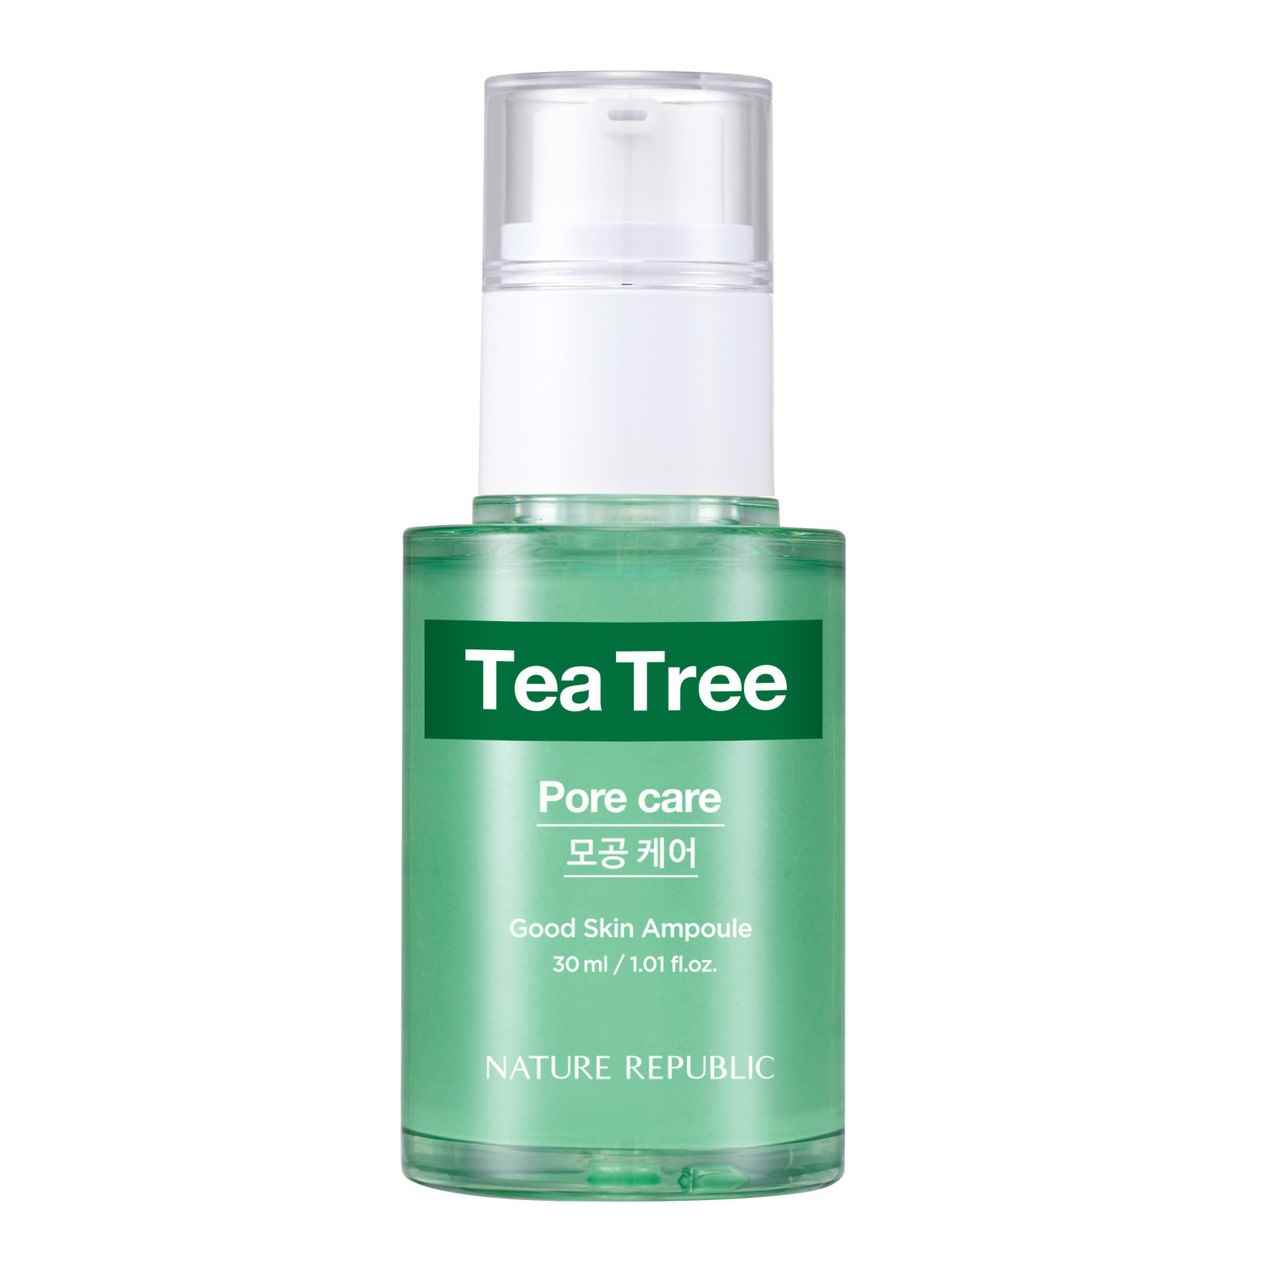 Nature Republic Tea Tree Good Skin Ampoule